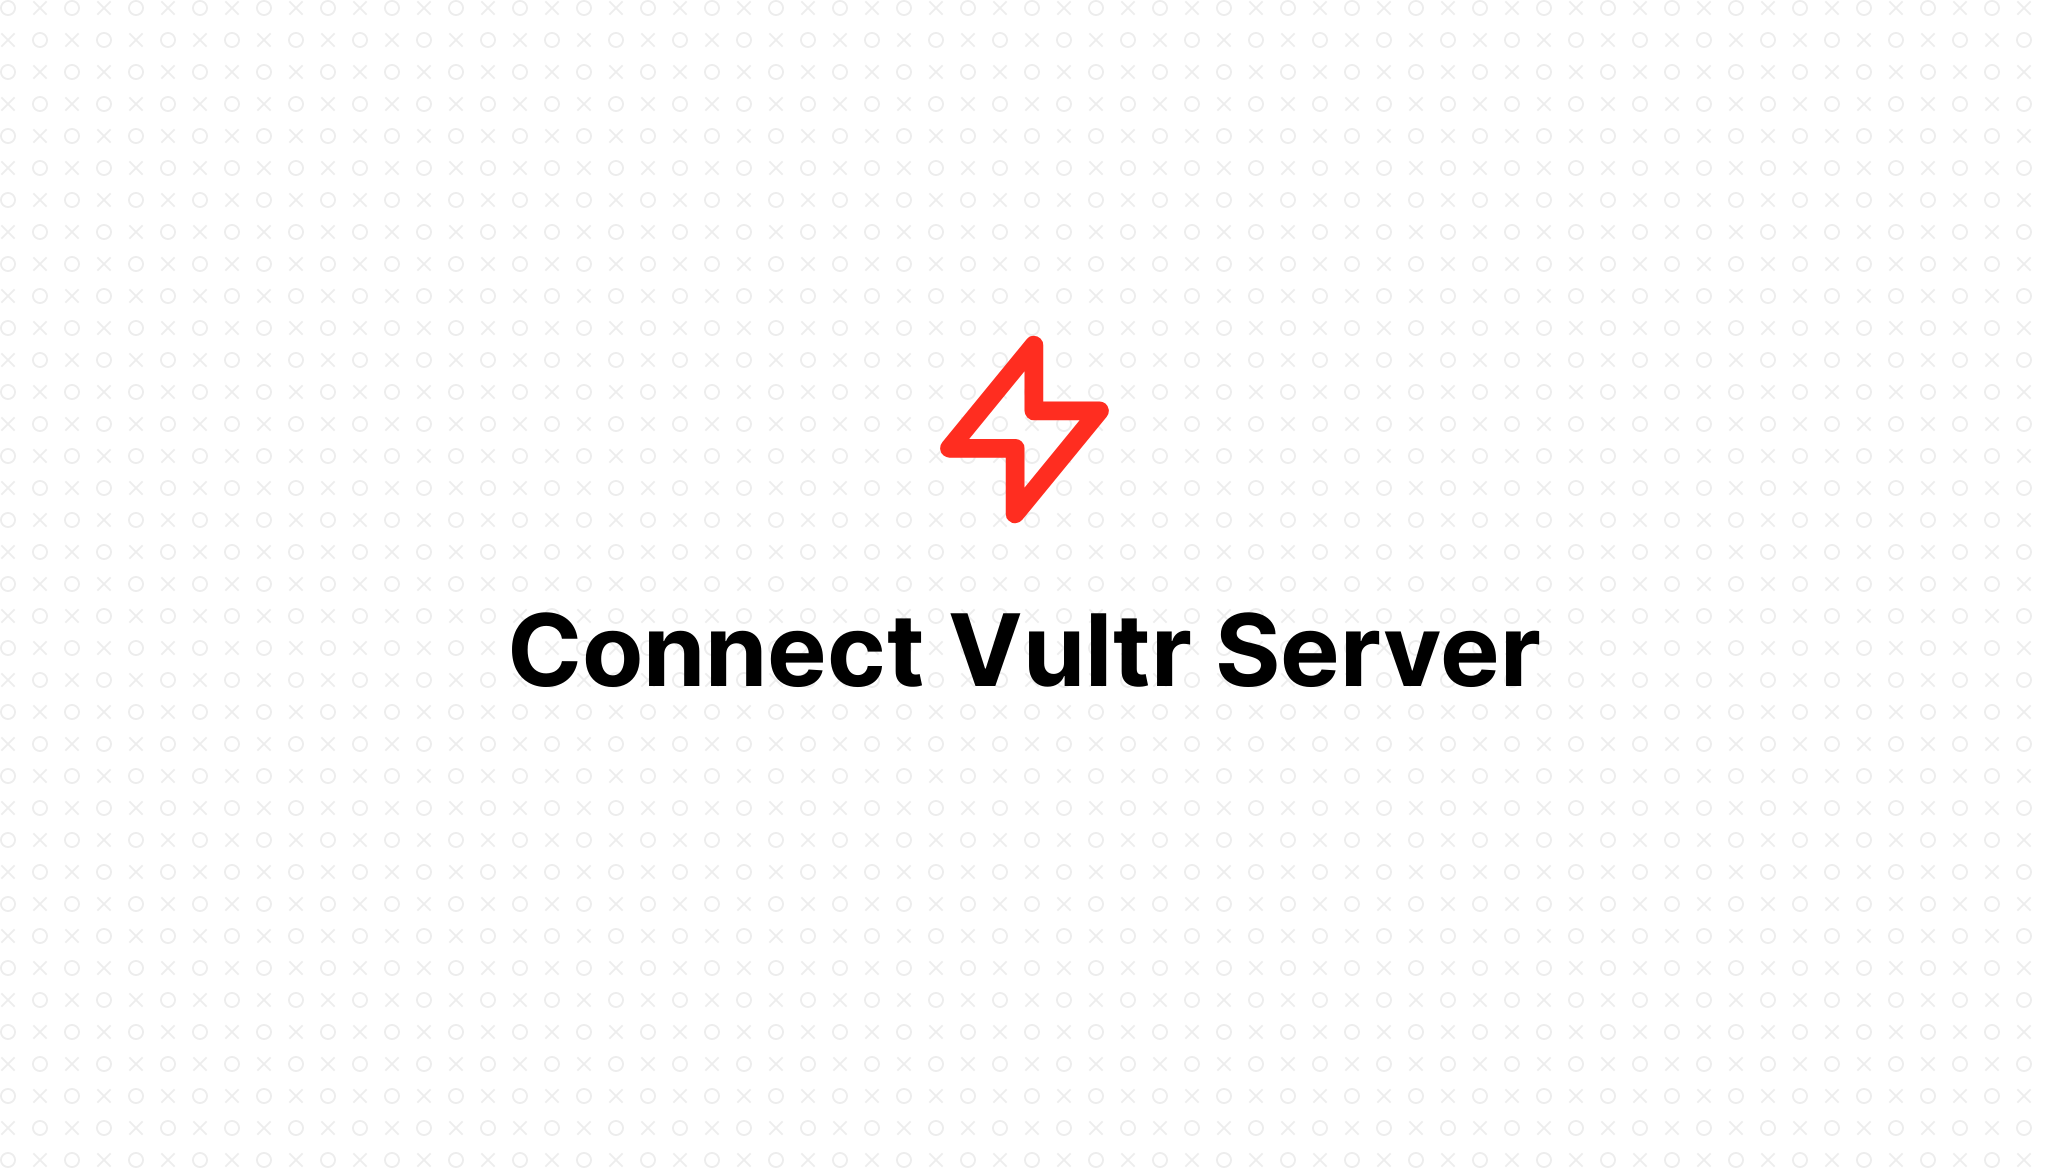 Connect Vultr Server